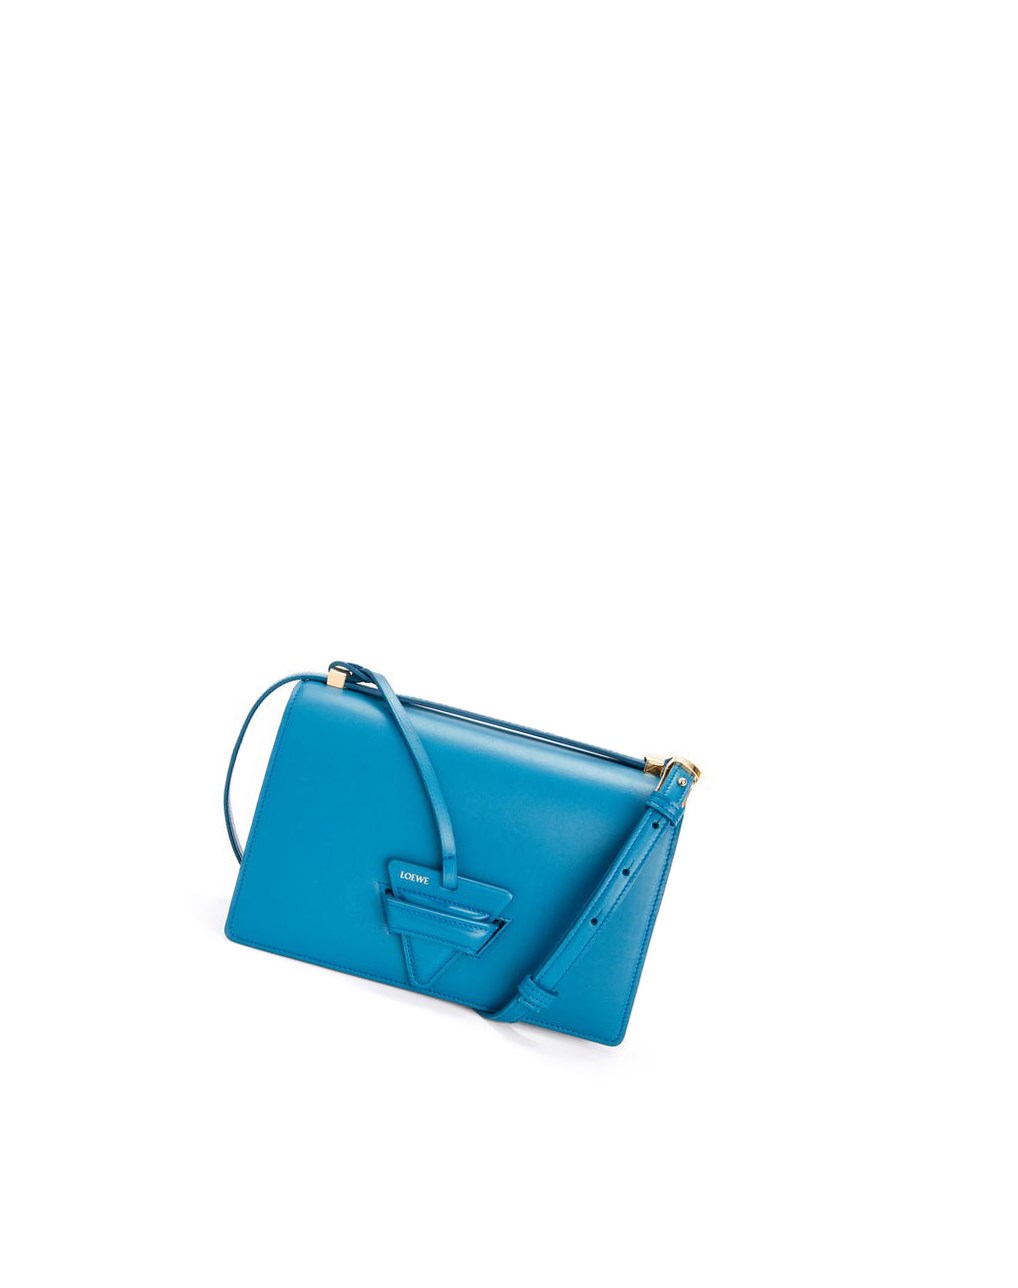 Loewe Barcelona bag in silk calfskin Lagoon Blue | EB1248957